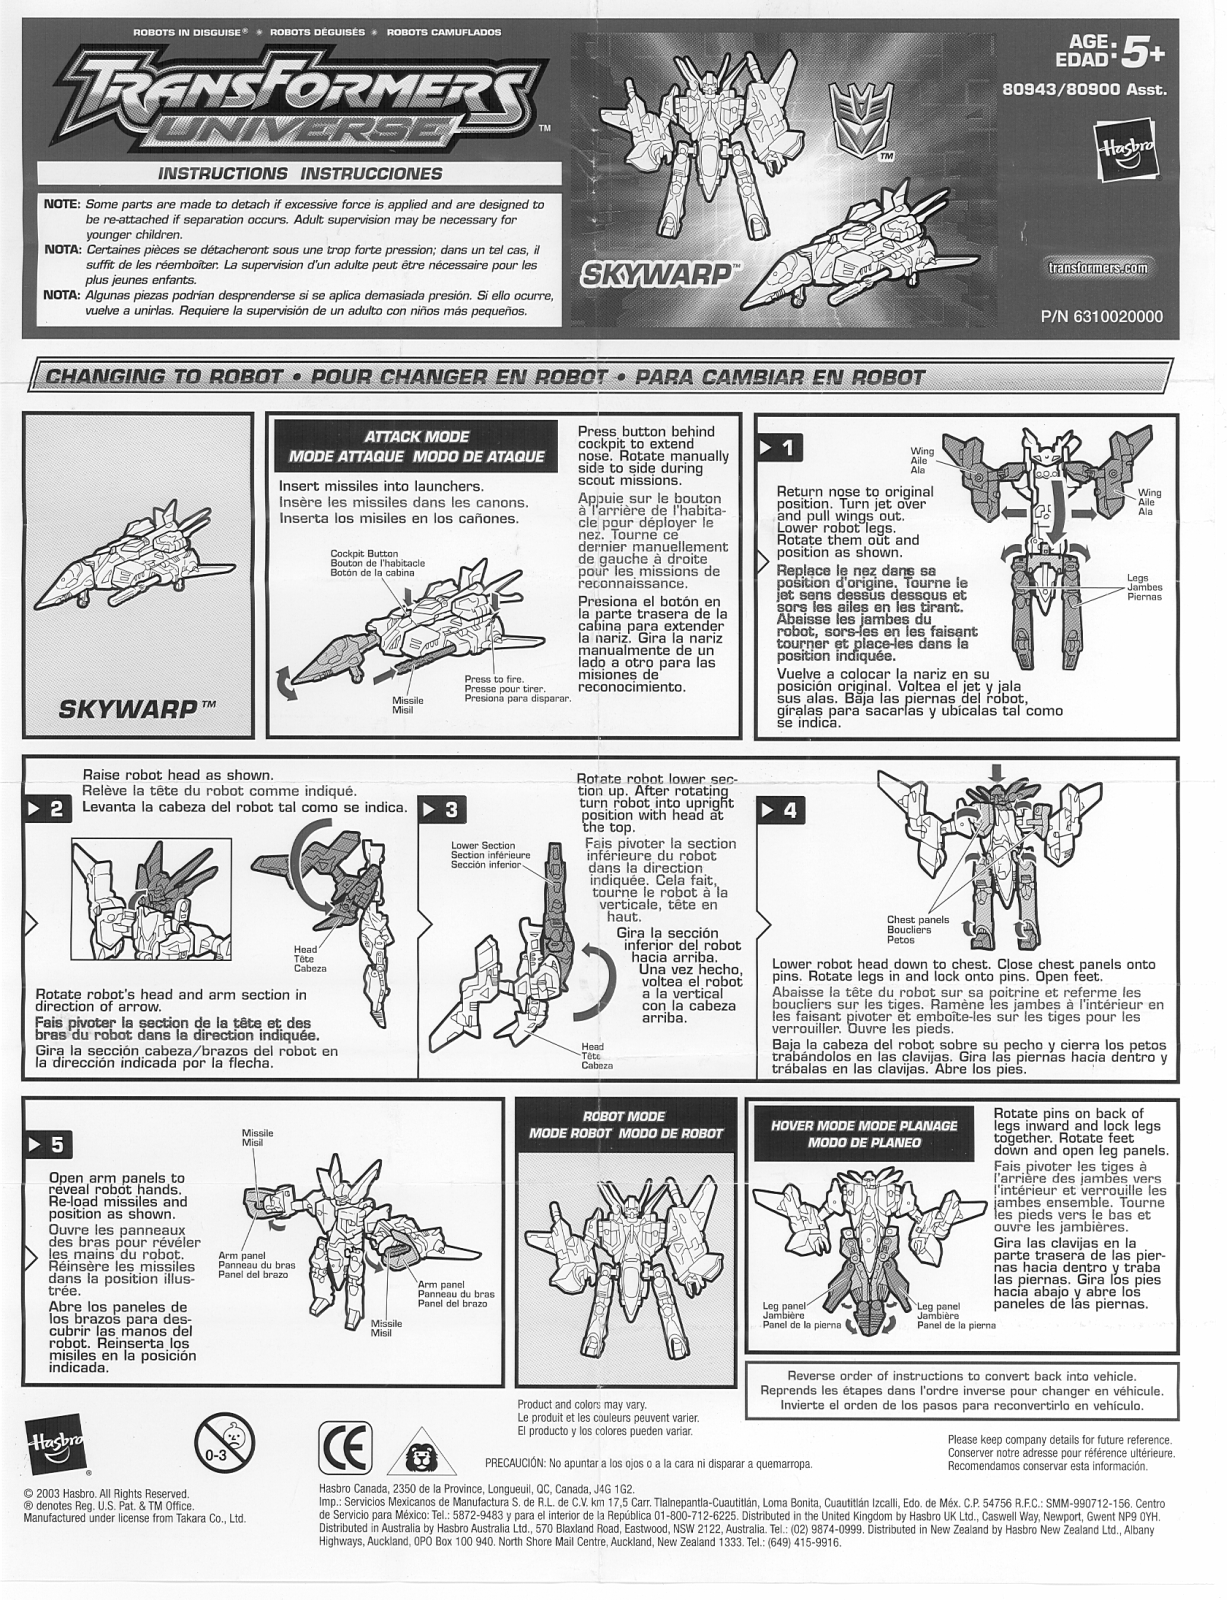 HASBRO Transformers Universe Skywarp User Manual